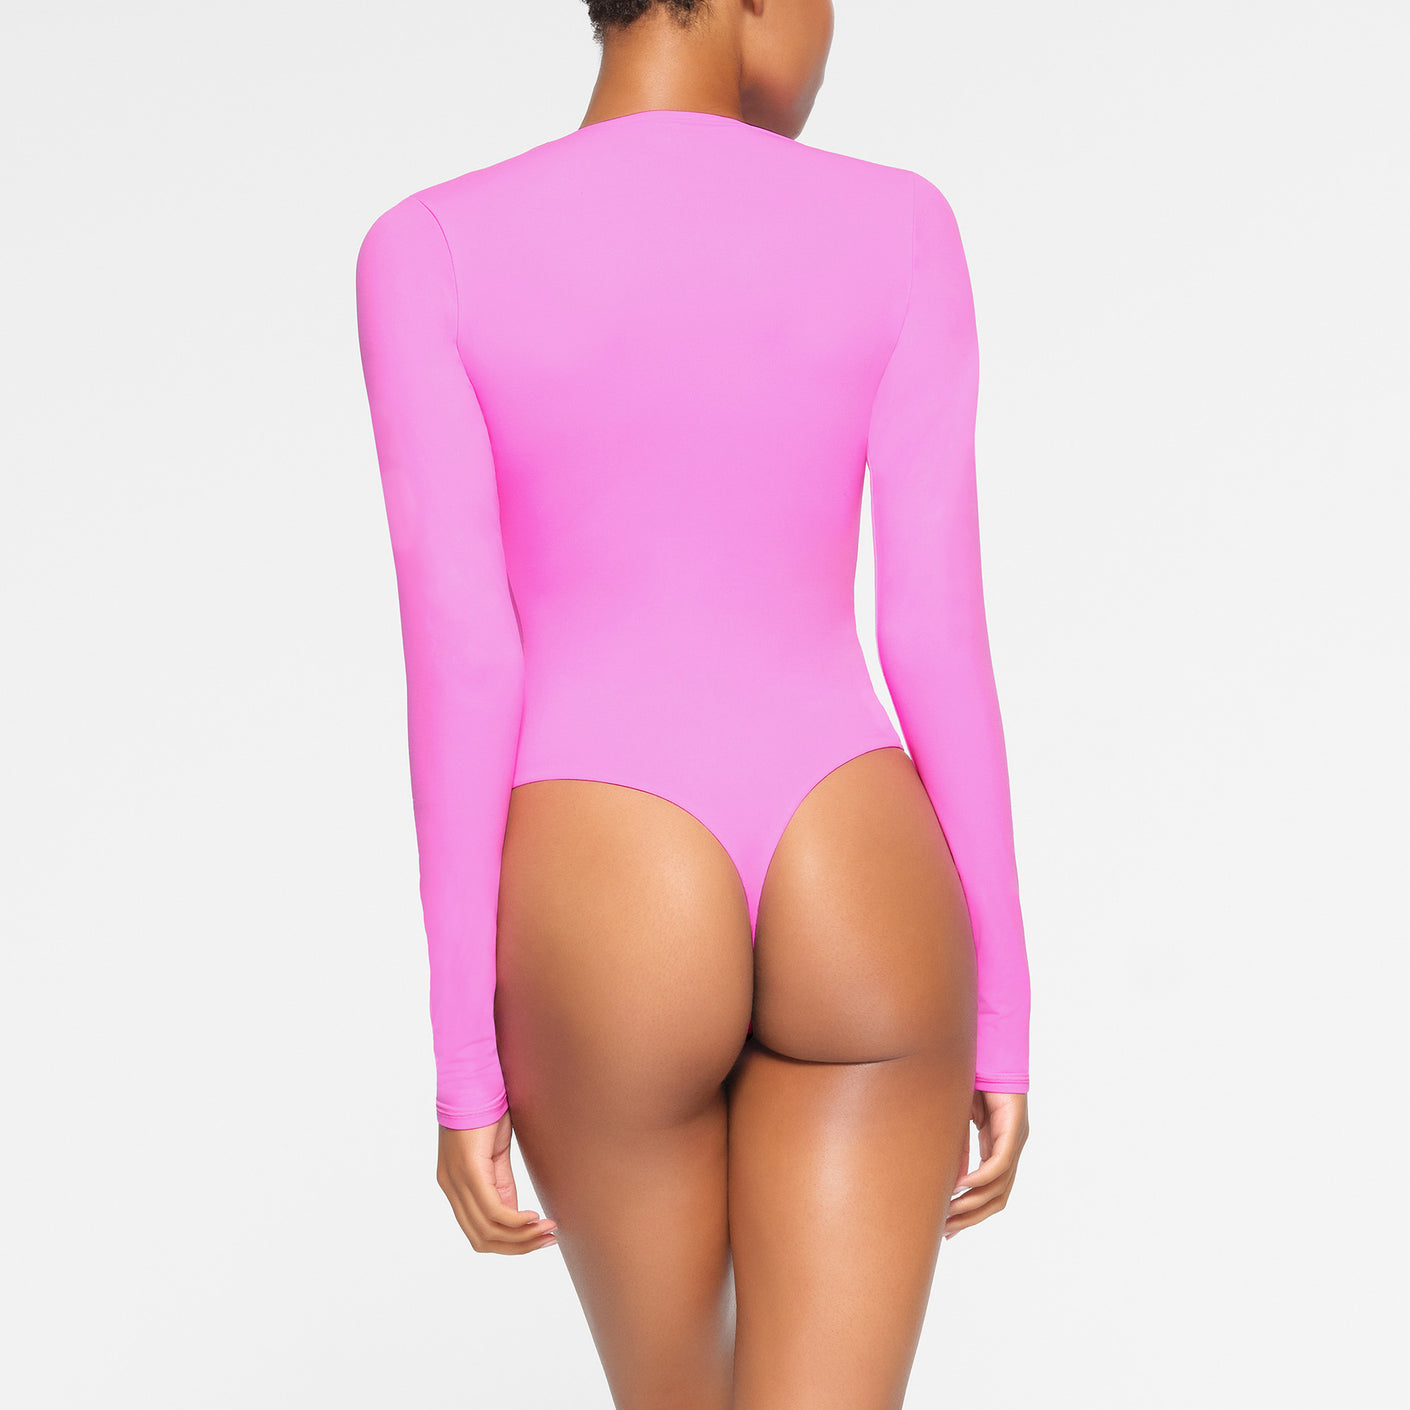 PrettyLittleThing Neon Bodysuit, Price from £6